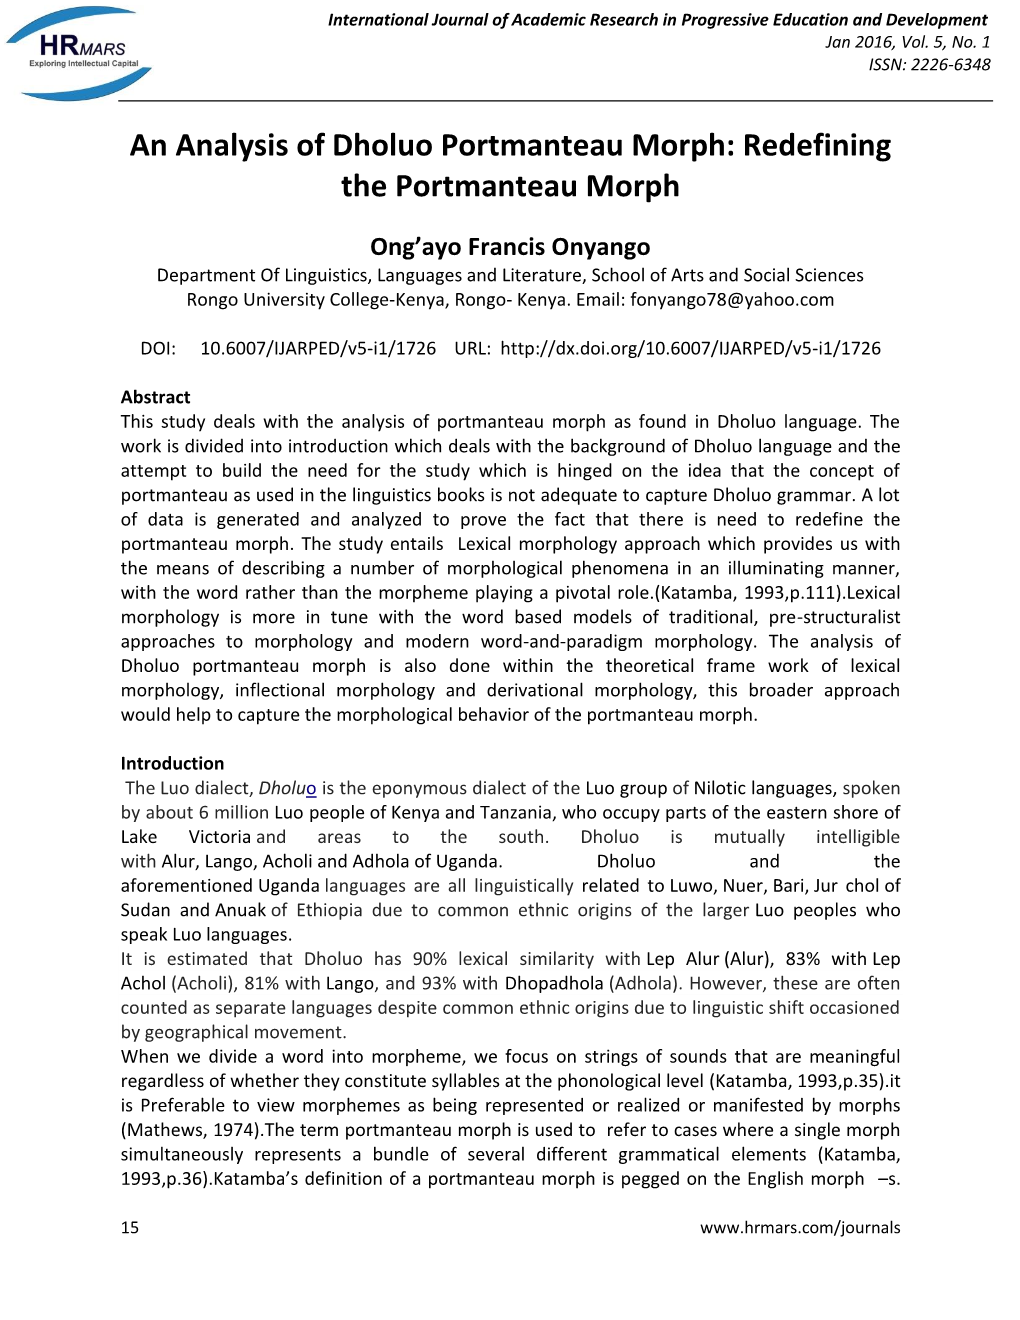 An Analysis of Dholuo Portmanteau Morph: Redefining the Portmanteau Morph